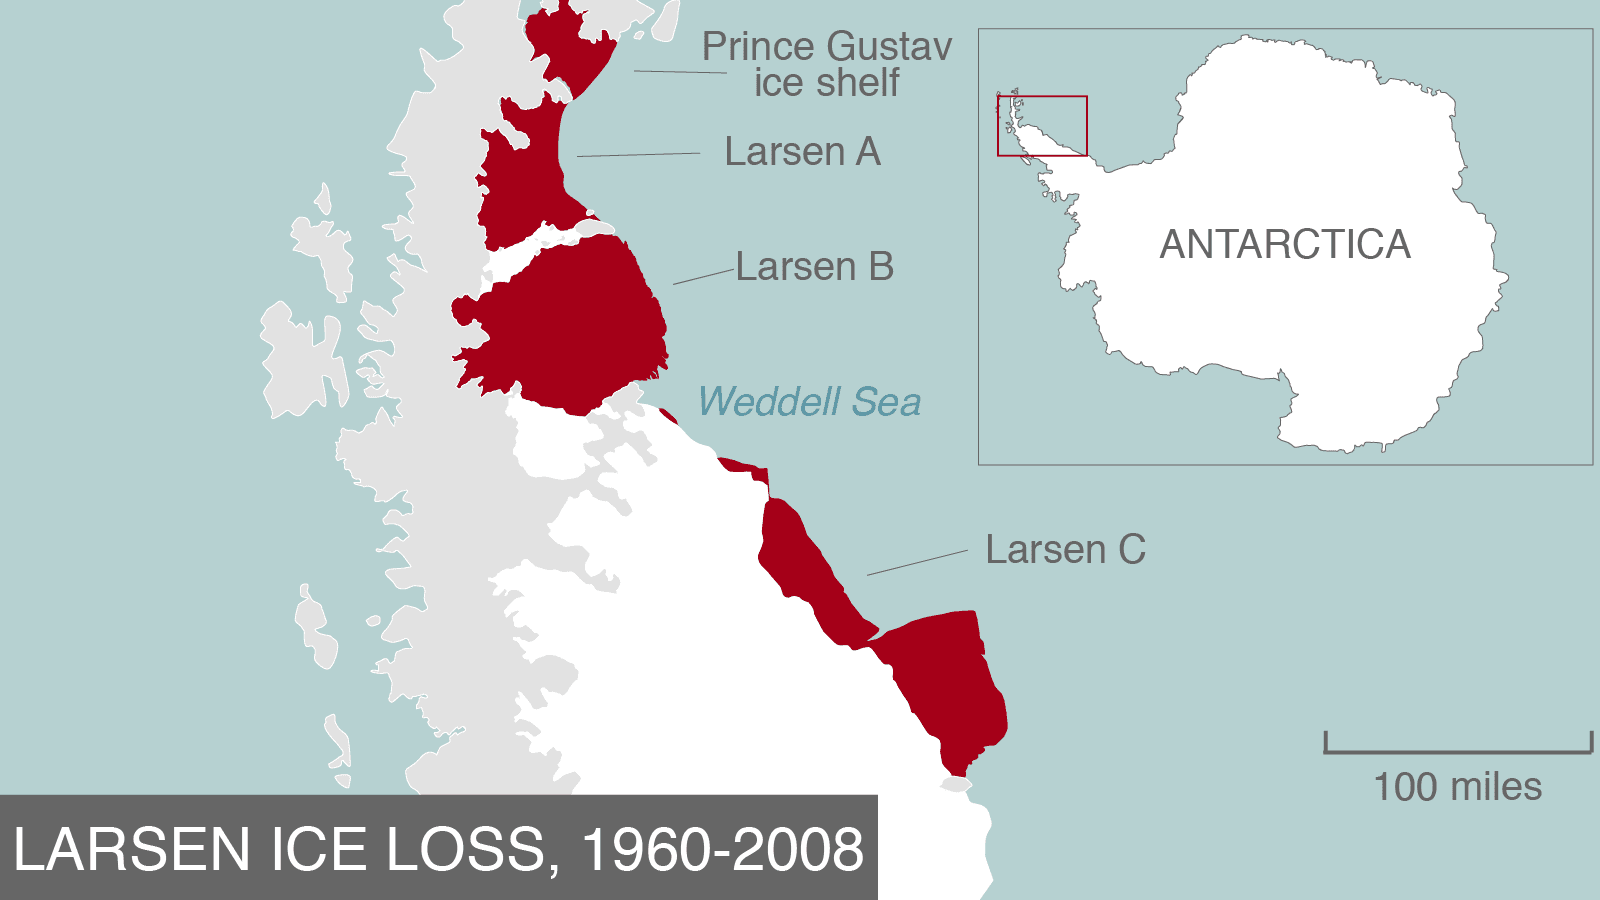 Total ice loss on the Larsen ice shelf, 1960-2008